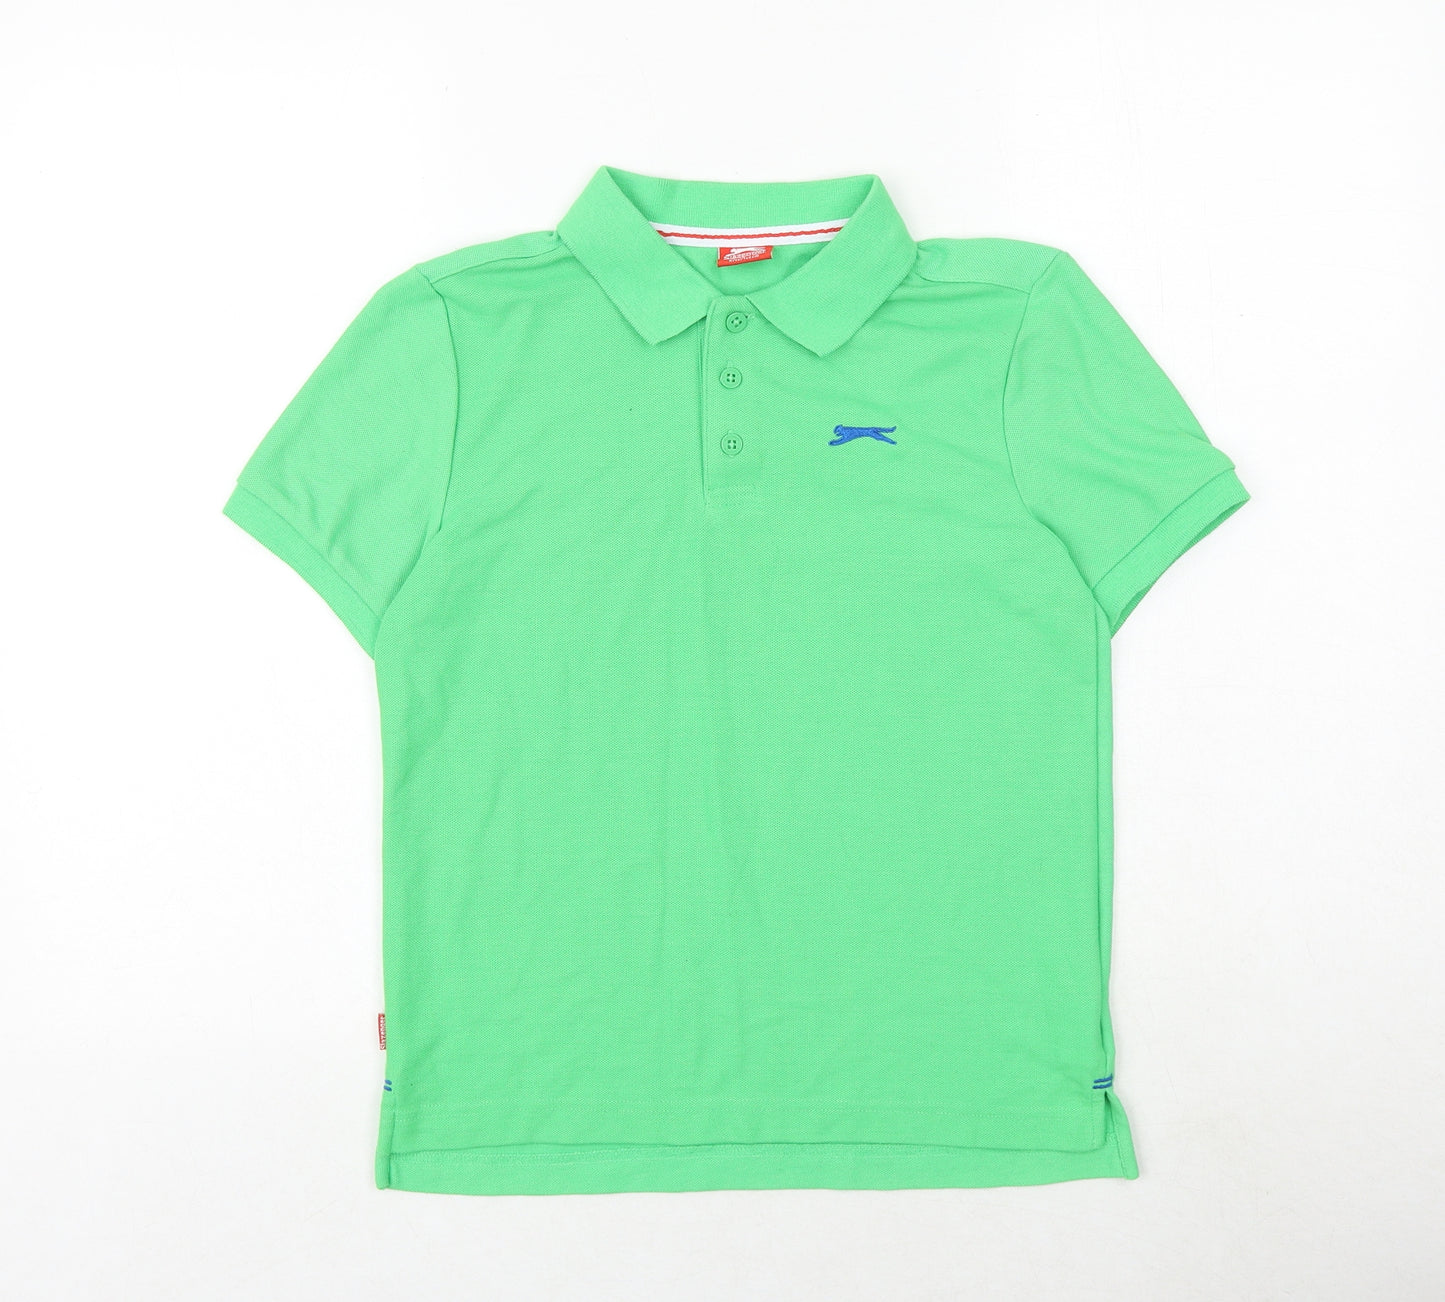 Slazenger Boys Green Polyester Pullover Polo Size 11-12 Years Collared Button